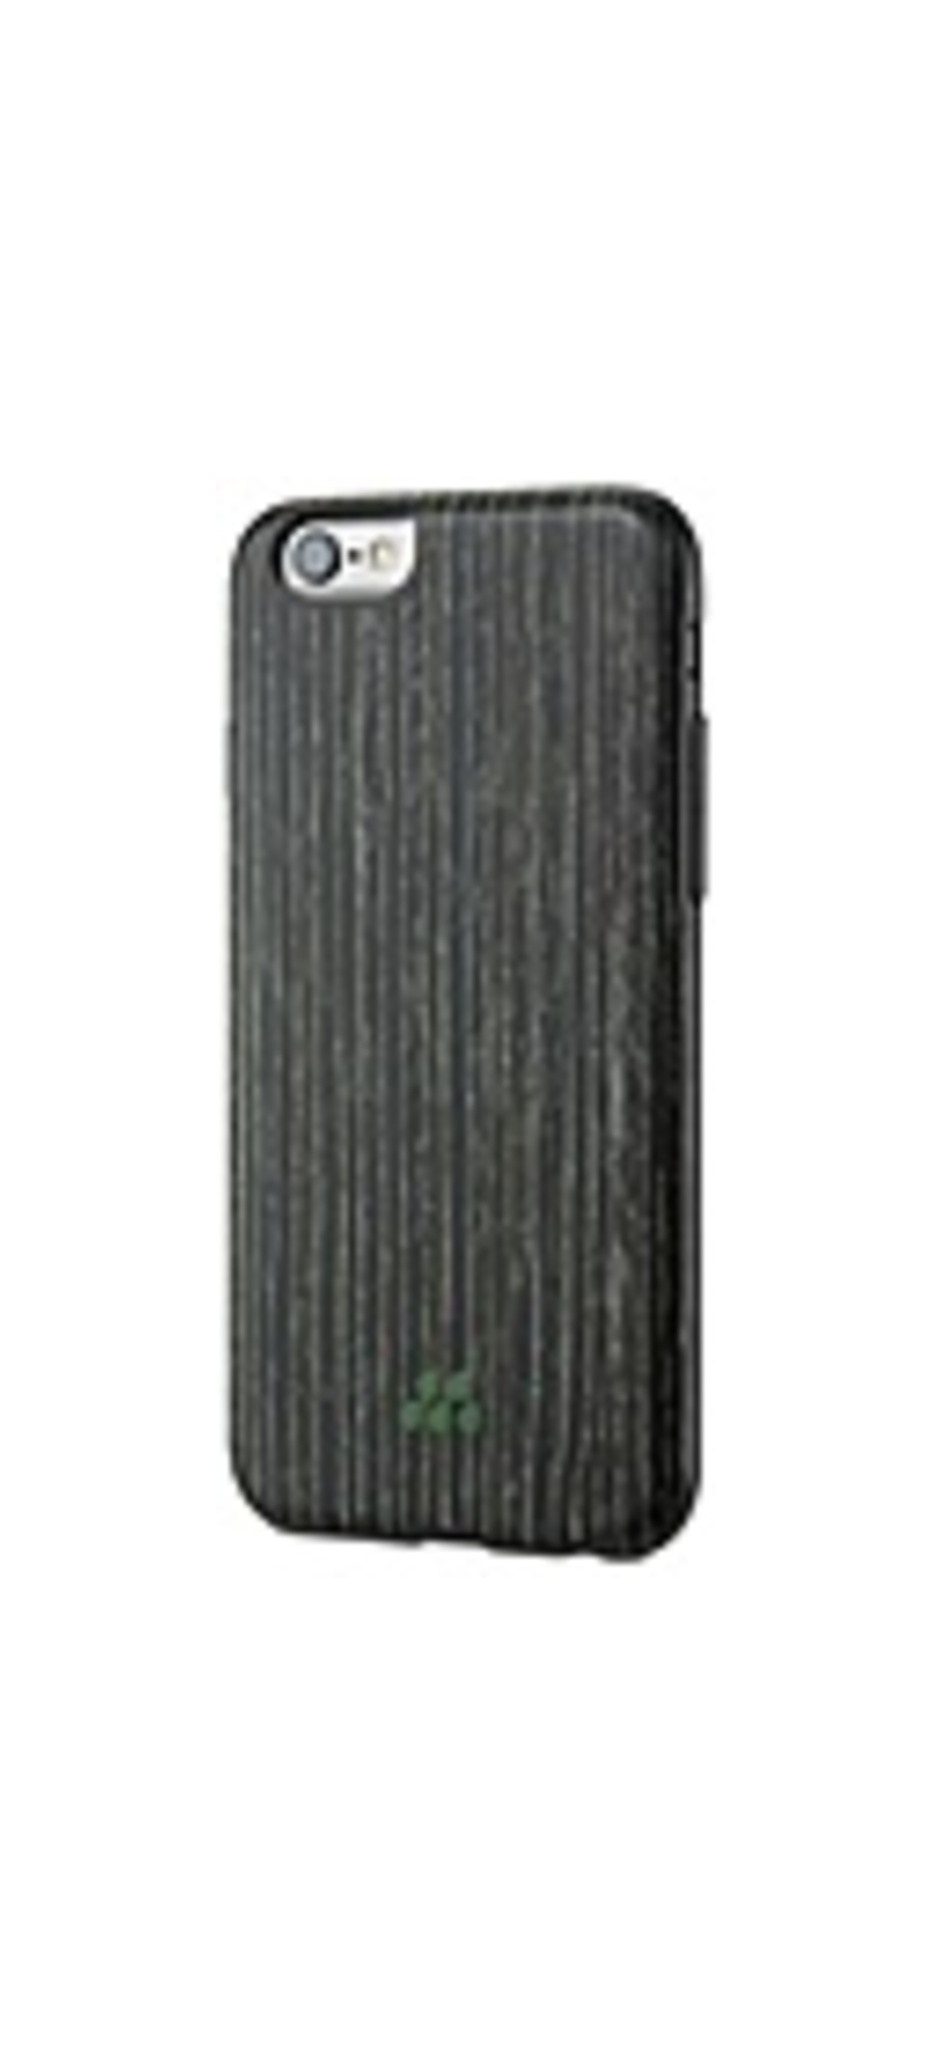 Evutec SI Wood Series Black Apricot for iPhone 6/6S - For iPhone 6, iPhone 6S - Black Apricot - Shock Resistant, Scratch Resistant, Drop Resistant - K